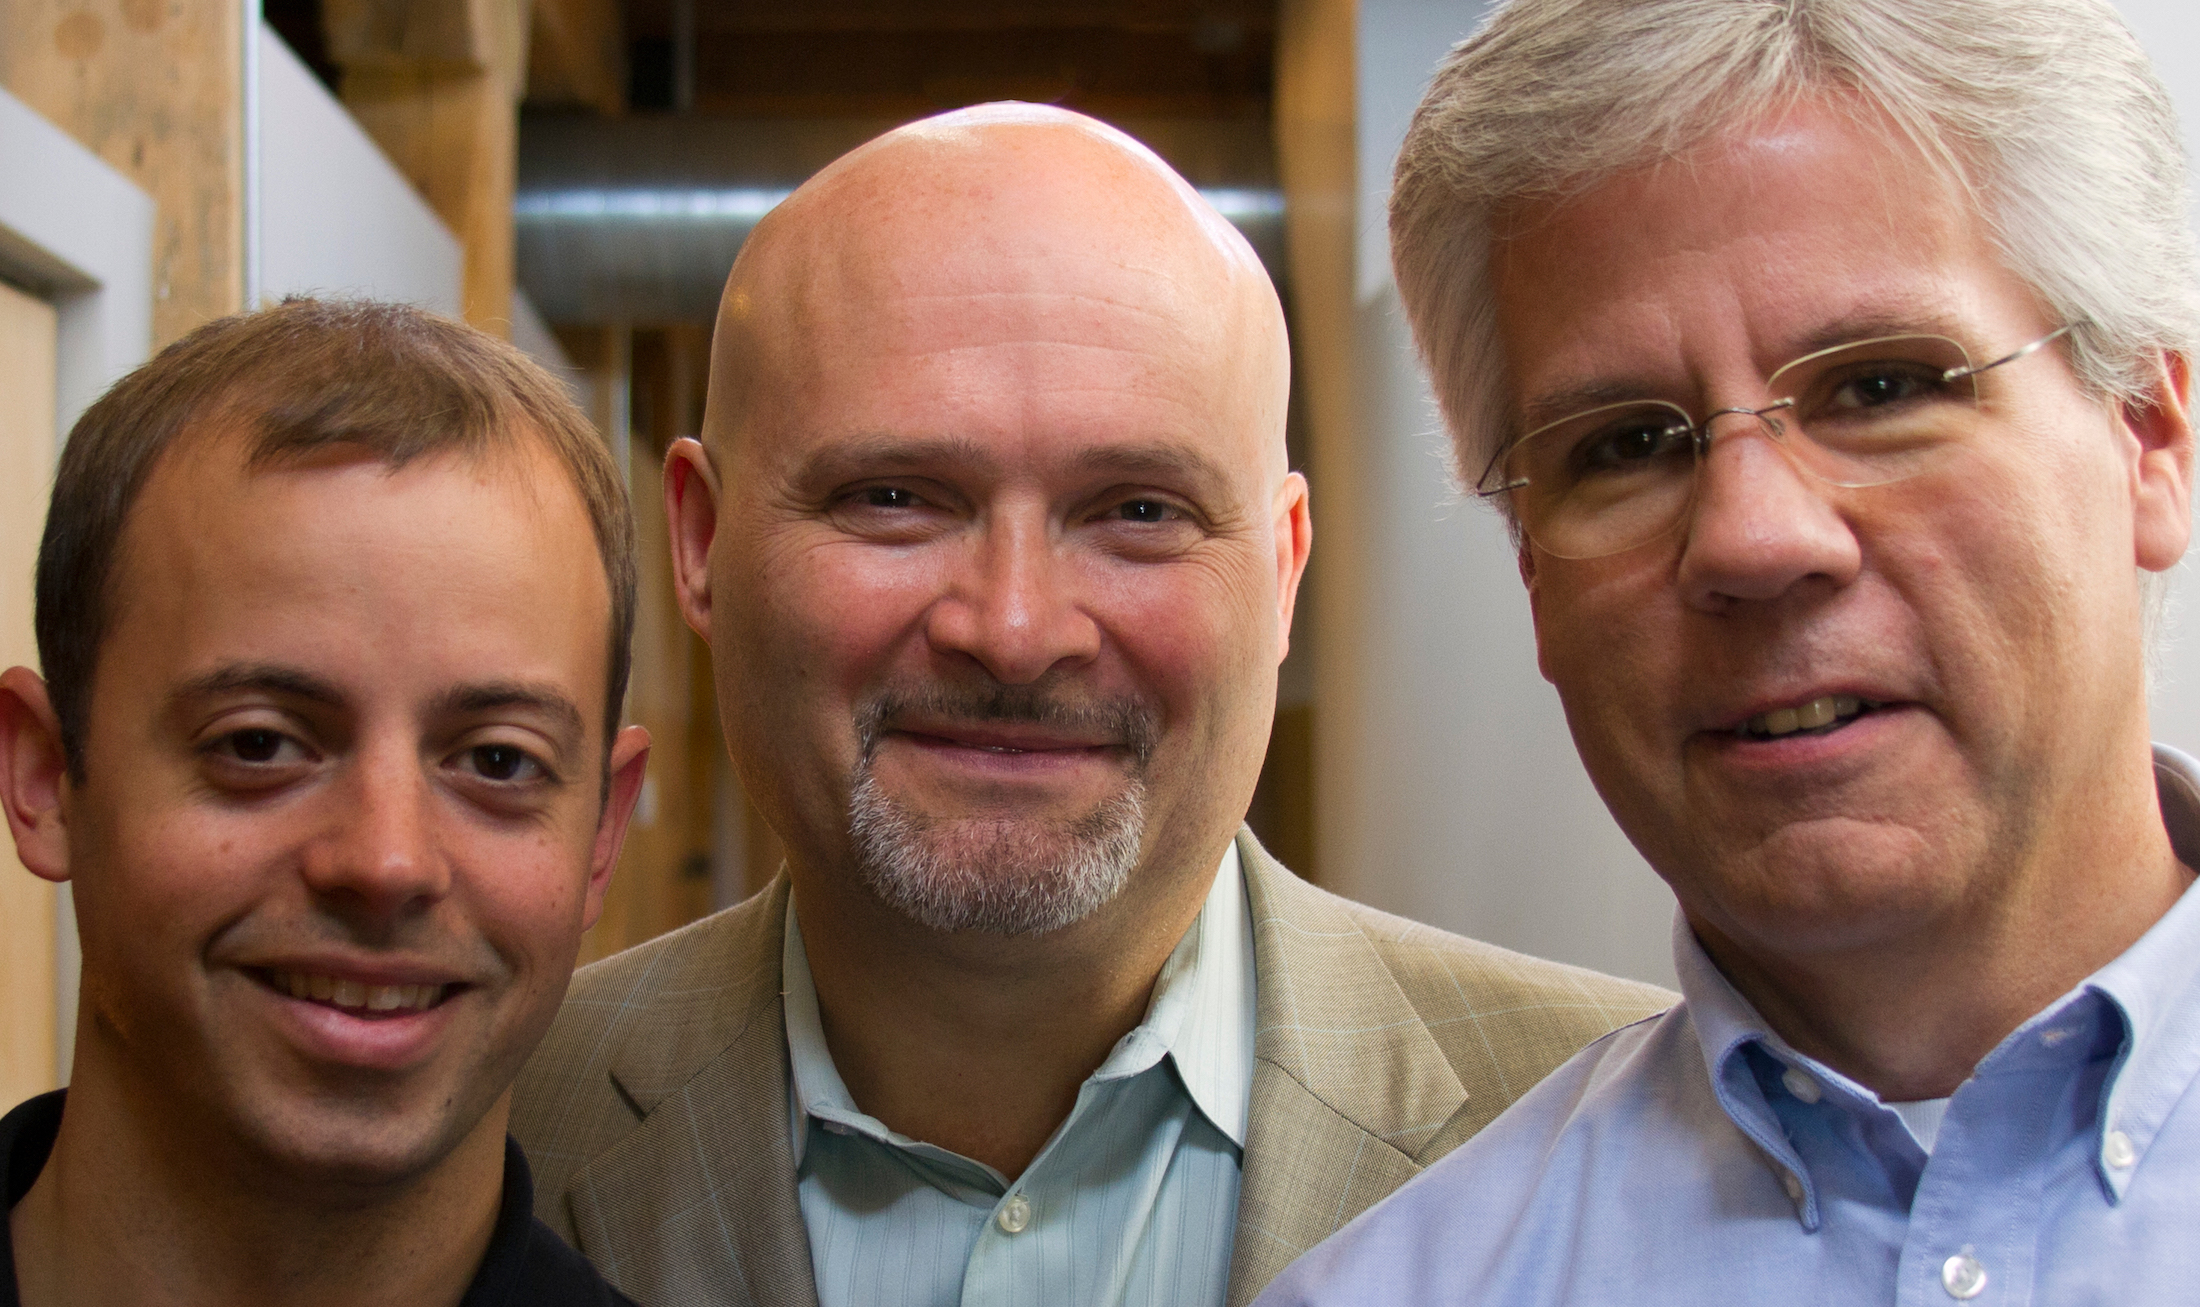 QFO Labs founding team (l to r): Jon Condon, CTO; Brad Pedersen, CEO; Jim Fairman, COO.